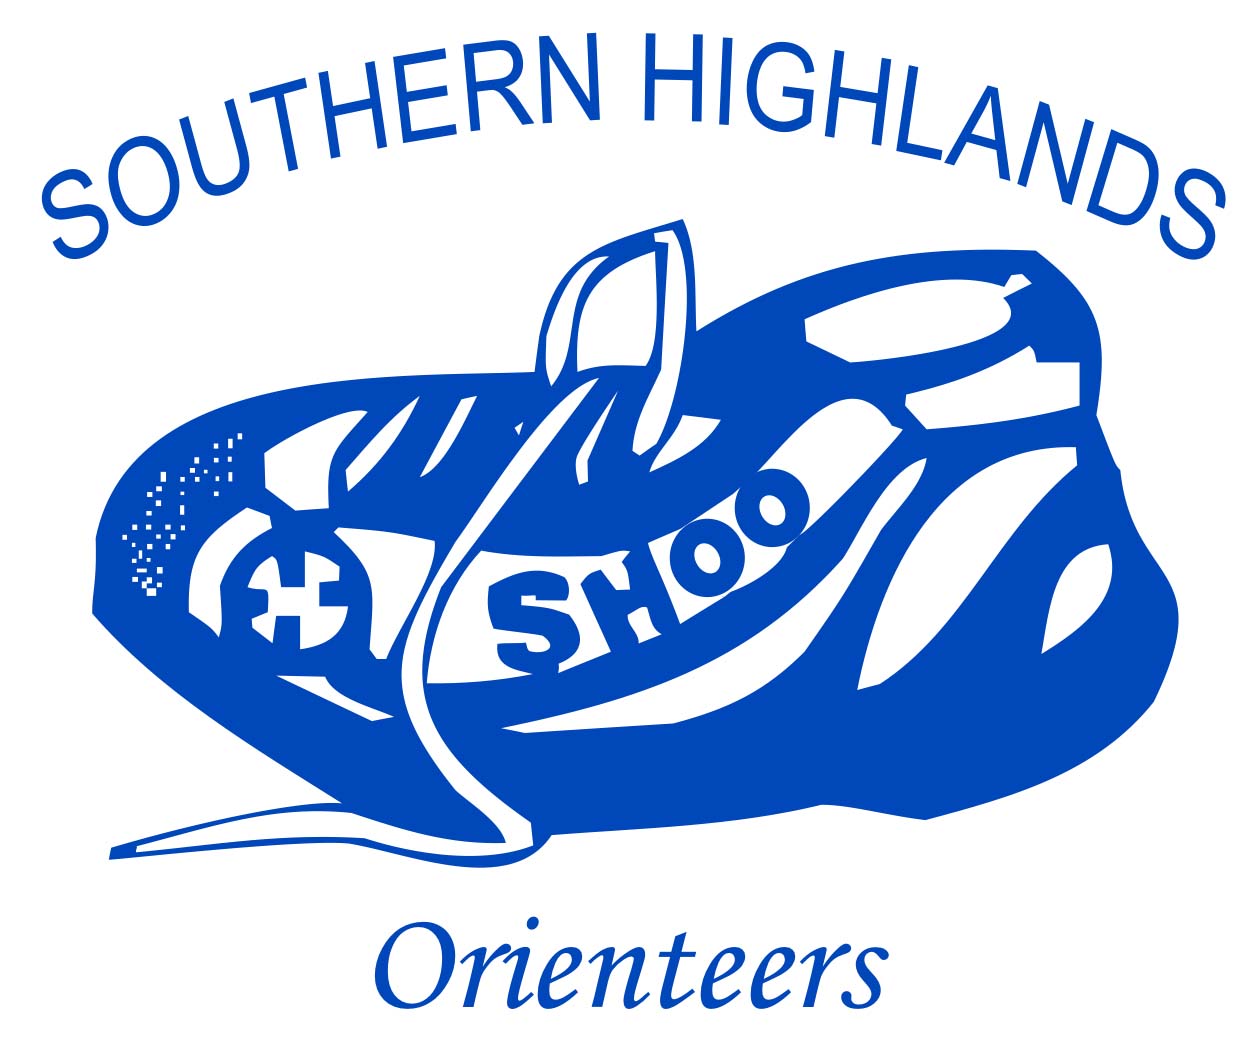 Southern Highlands Orienteers